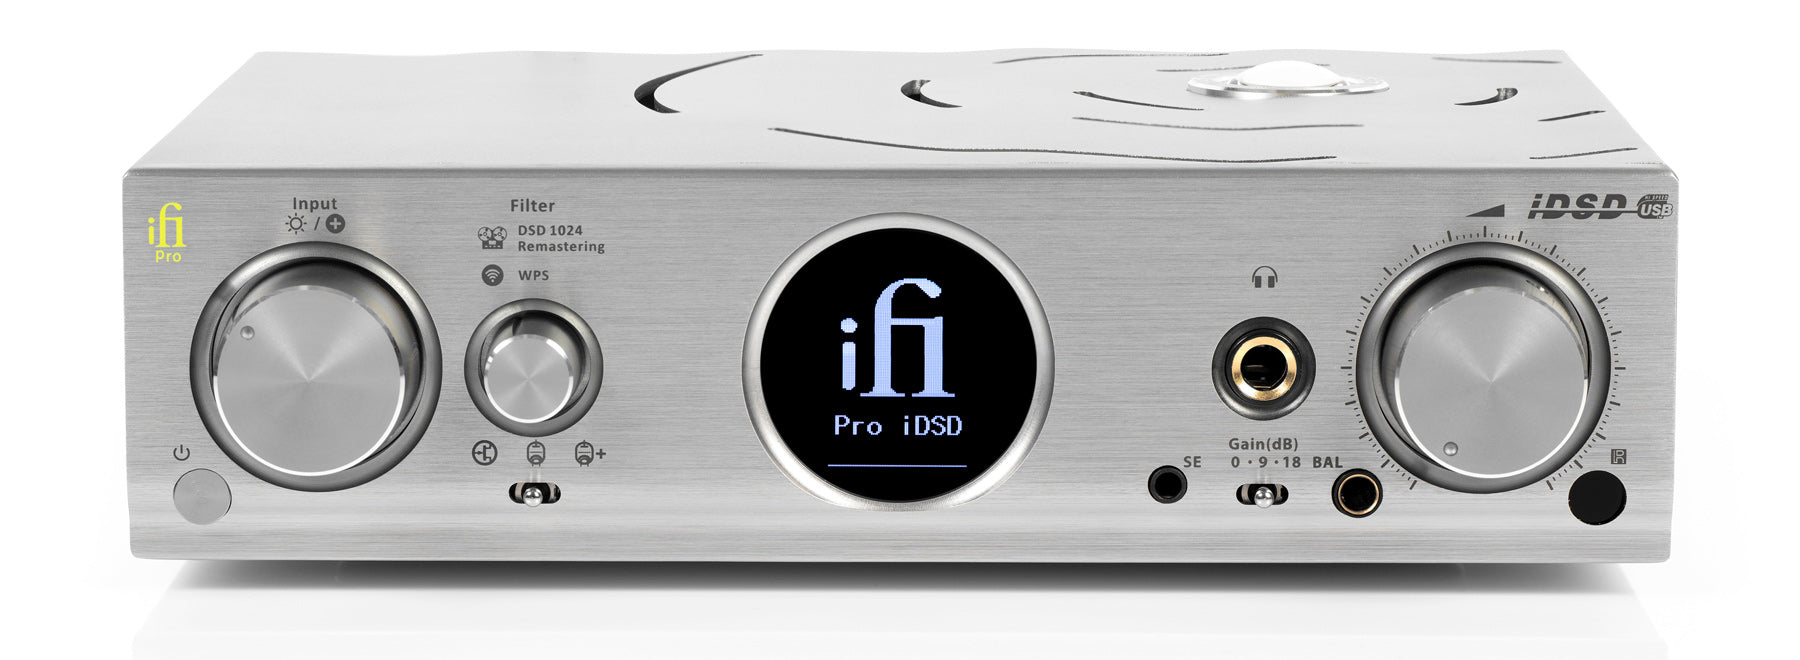 iFi Pro iDSD Headphone Streamer & DAC/Amplifier